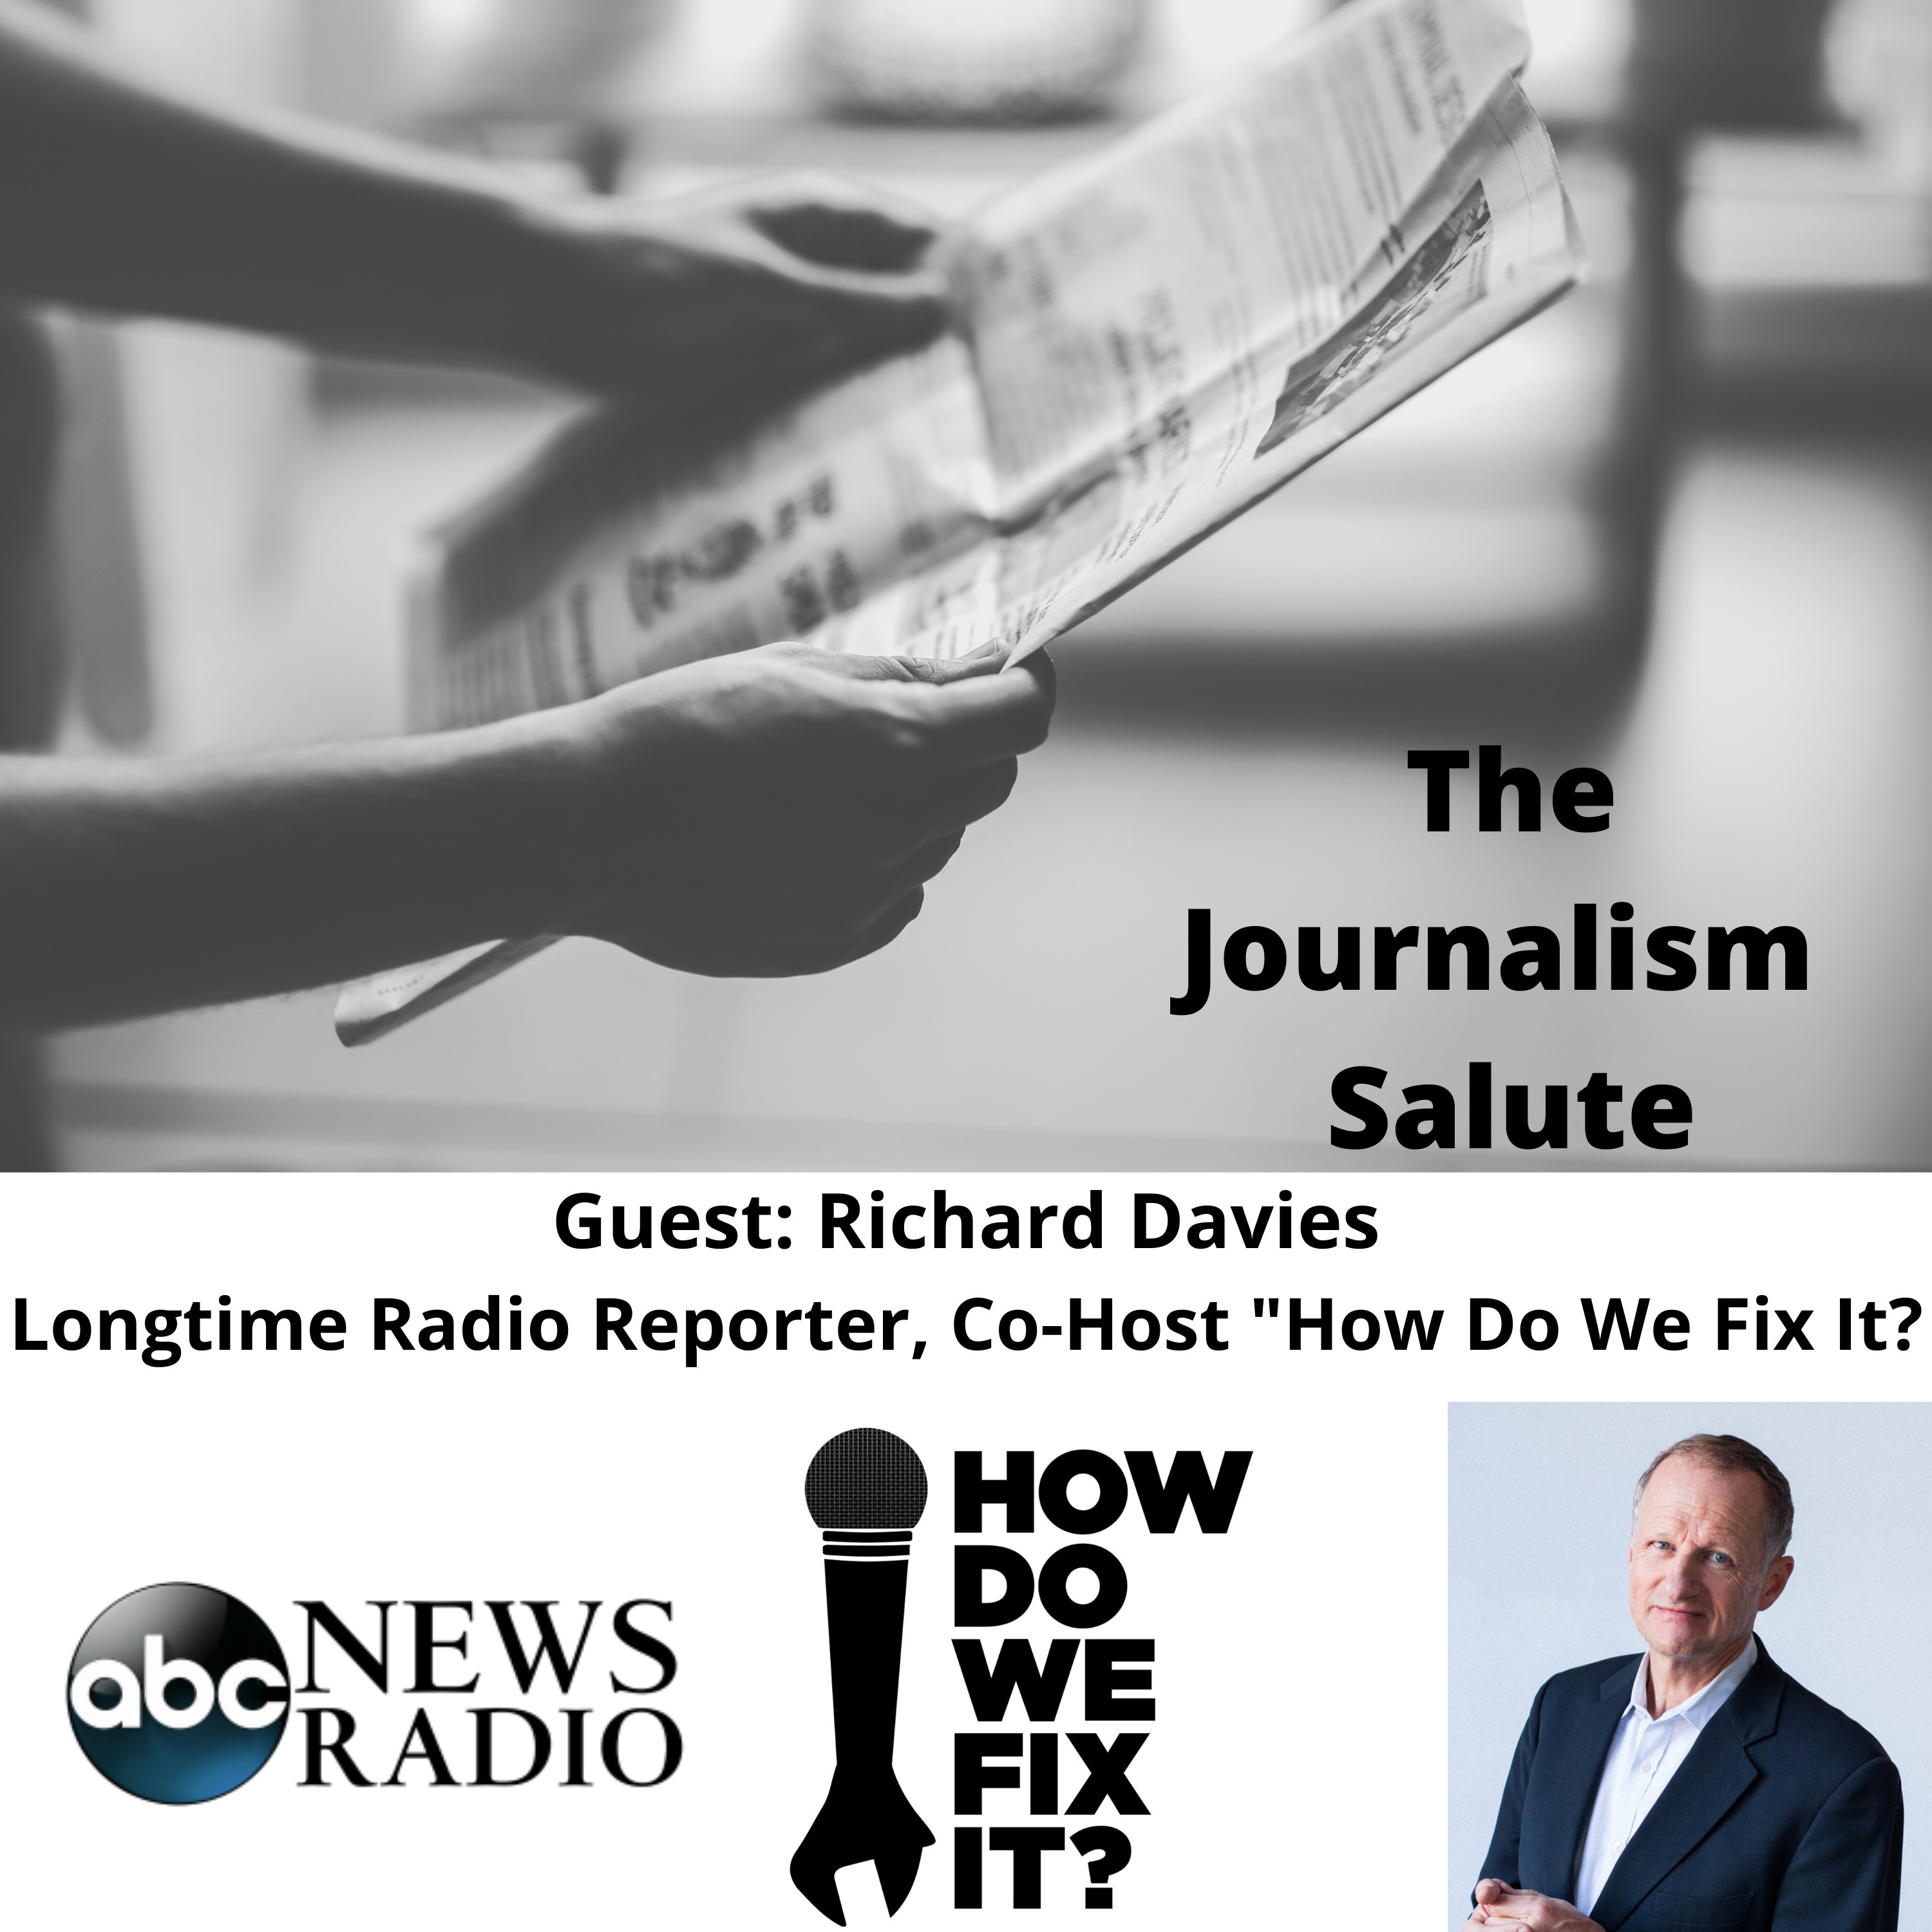 Longtime Radio Reporter Richard Davies: ”How Do We Fix It?”